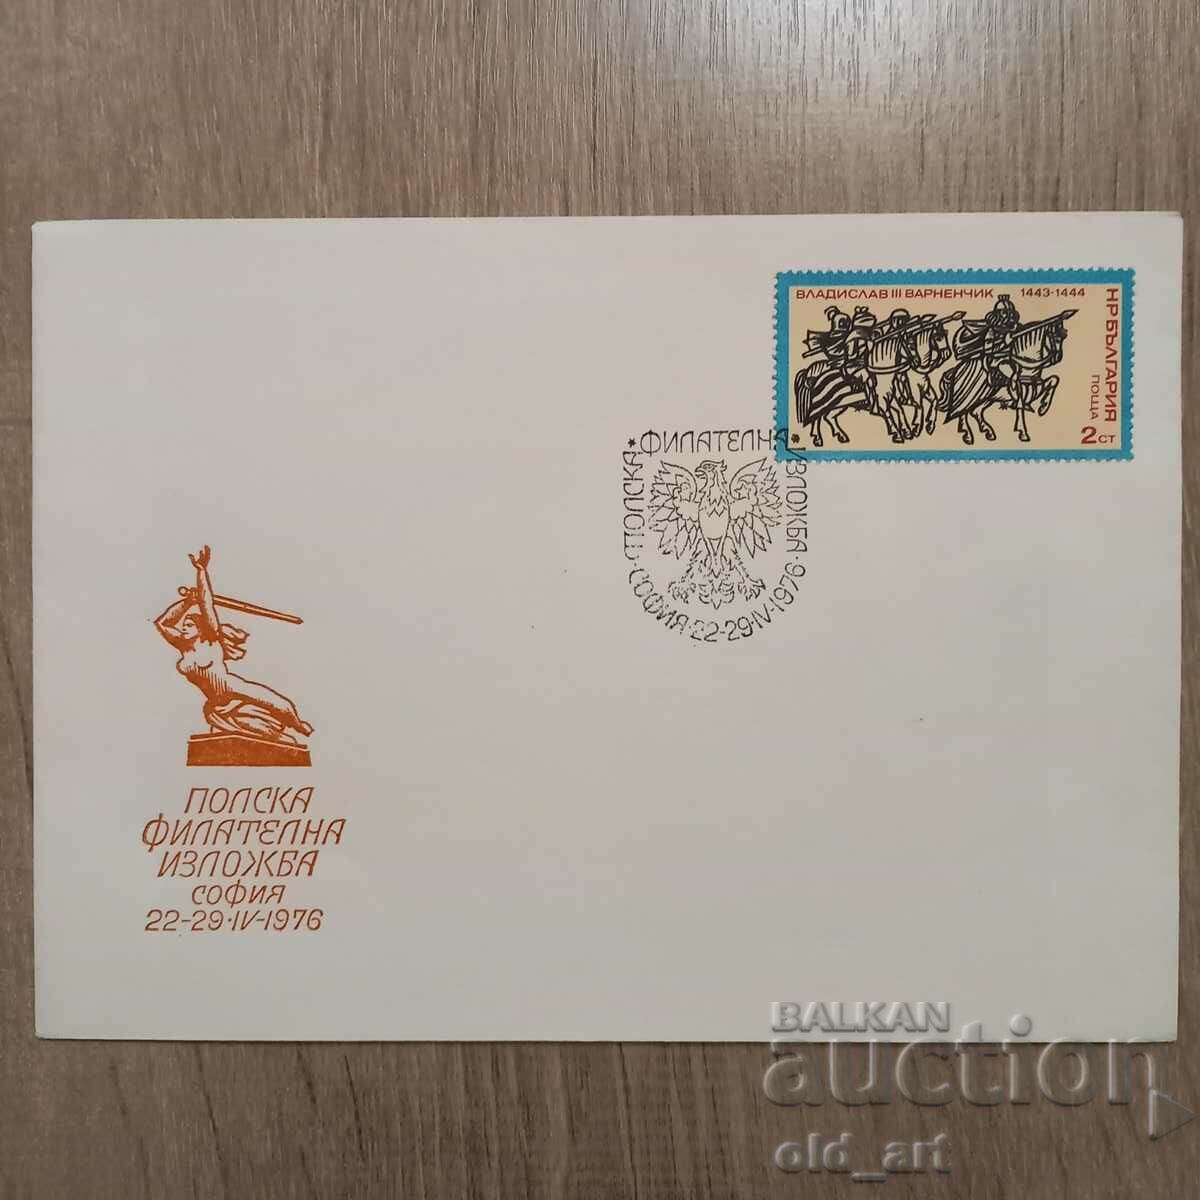 Postal envelope - Polish philatelic exhibition